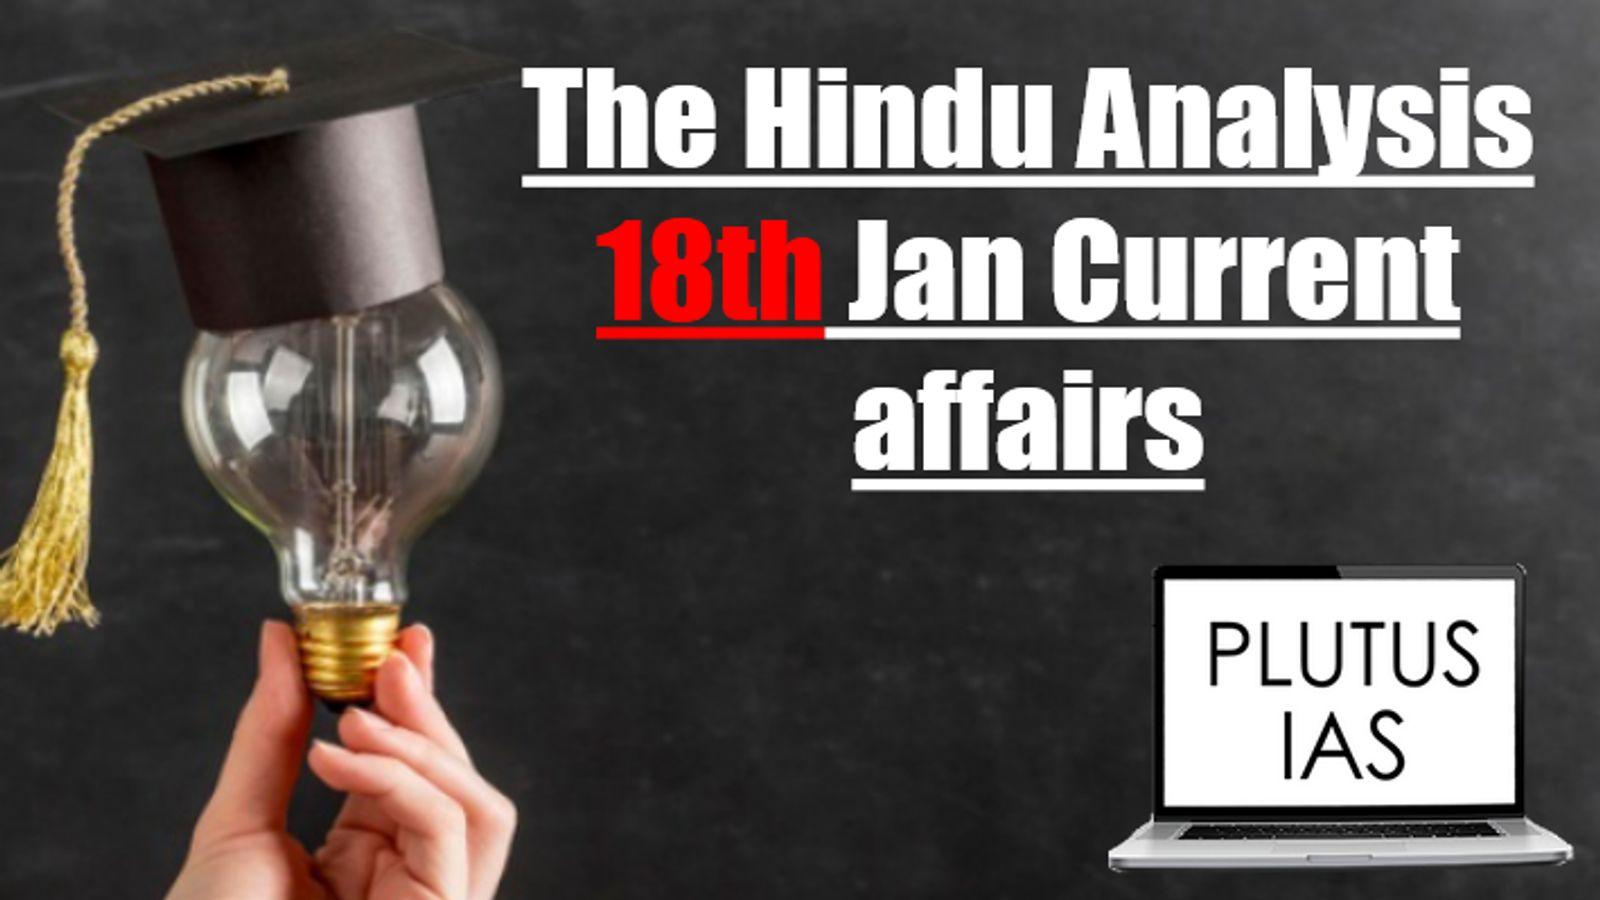 The Hindu Analysis 18th January